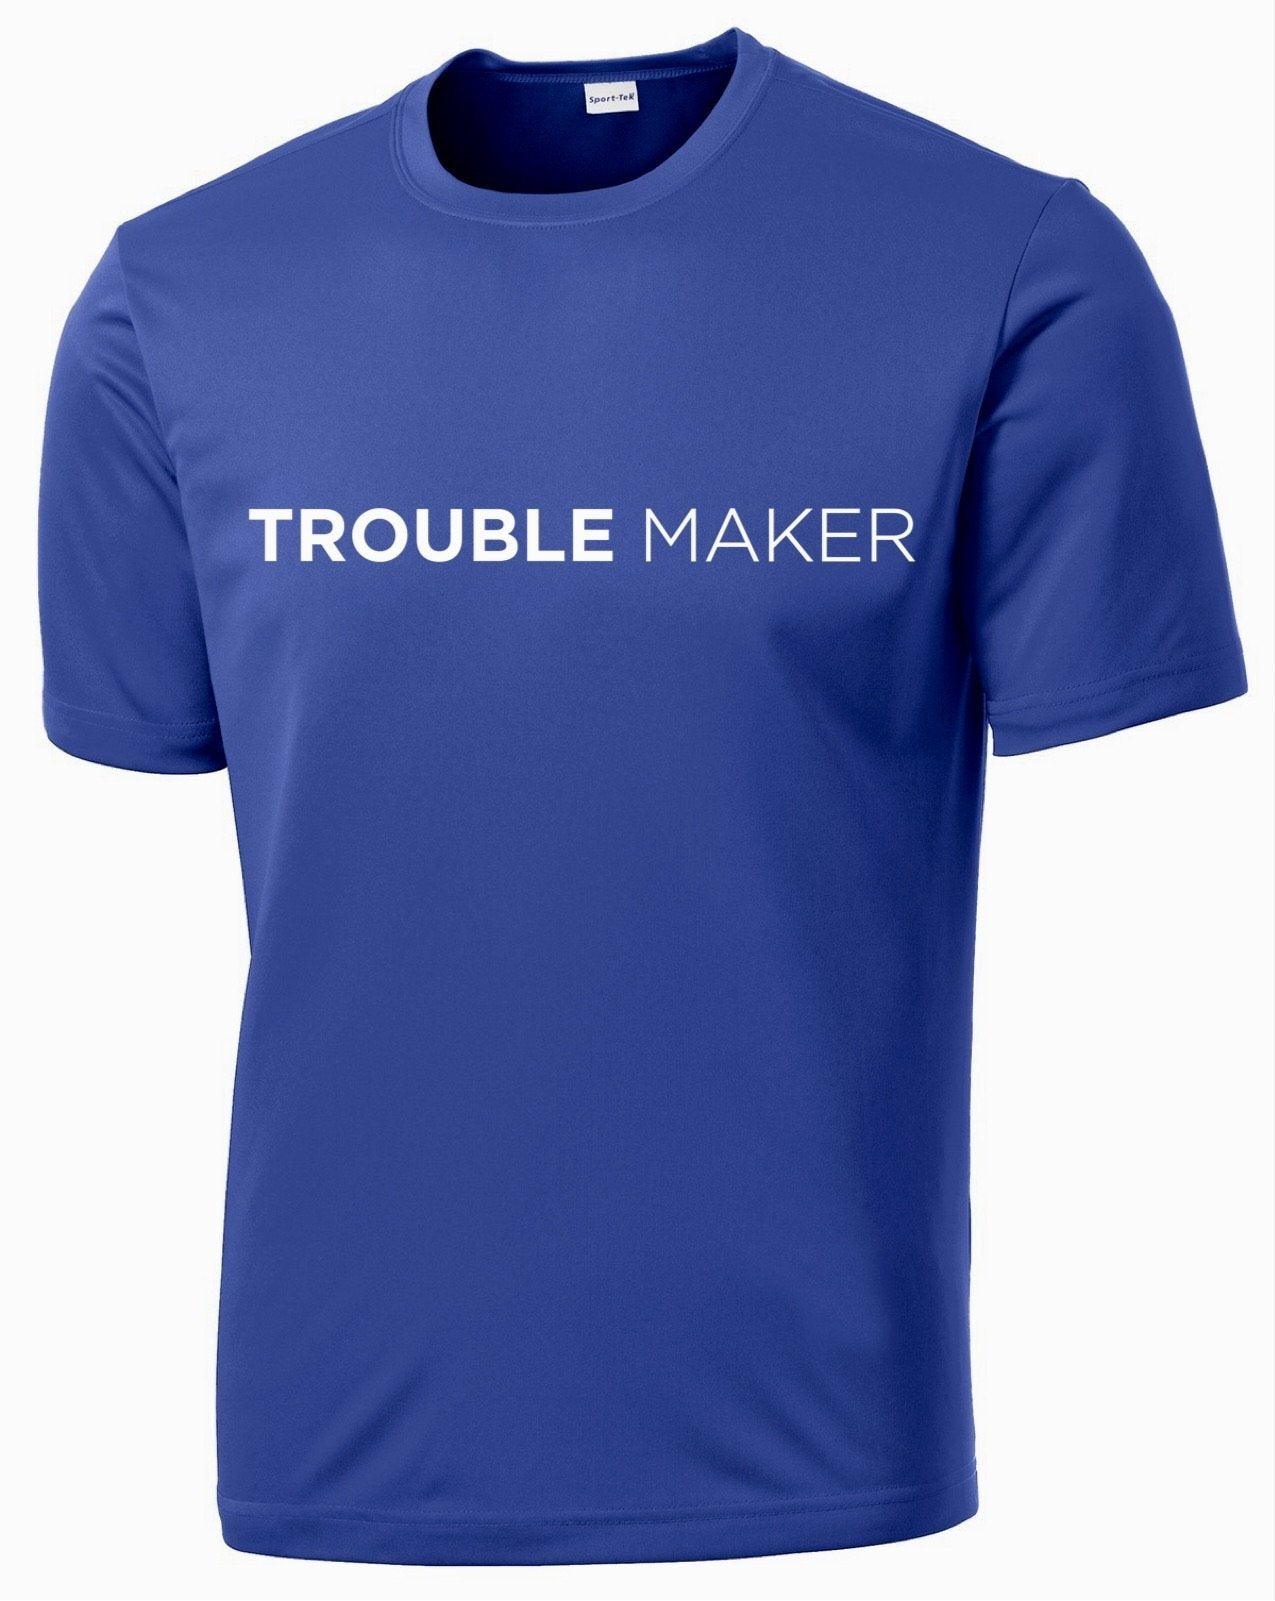 Men’s Trouble Maker T-Shirt T shirt Sport Tek S Royal Blue 